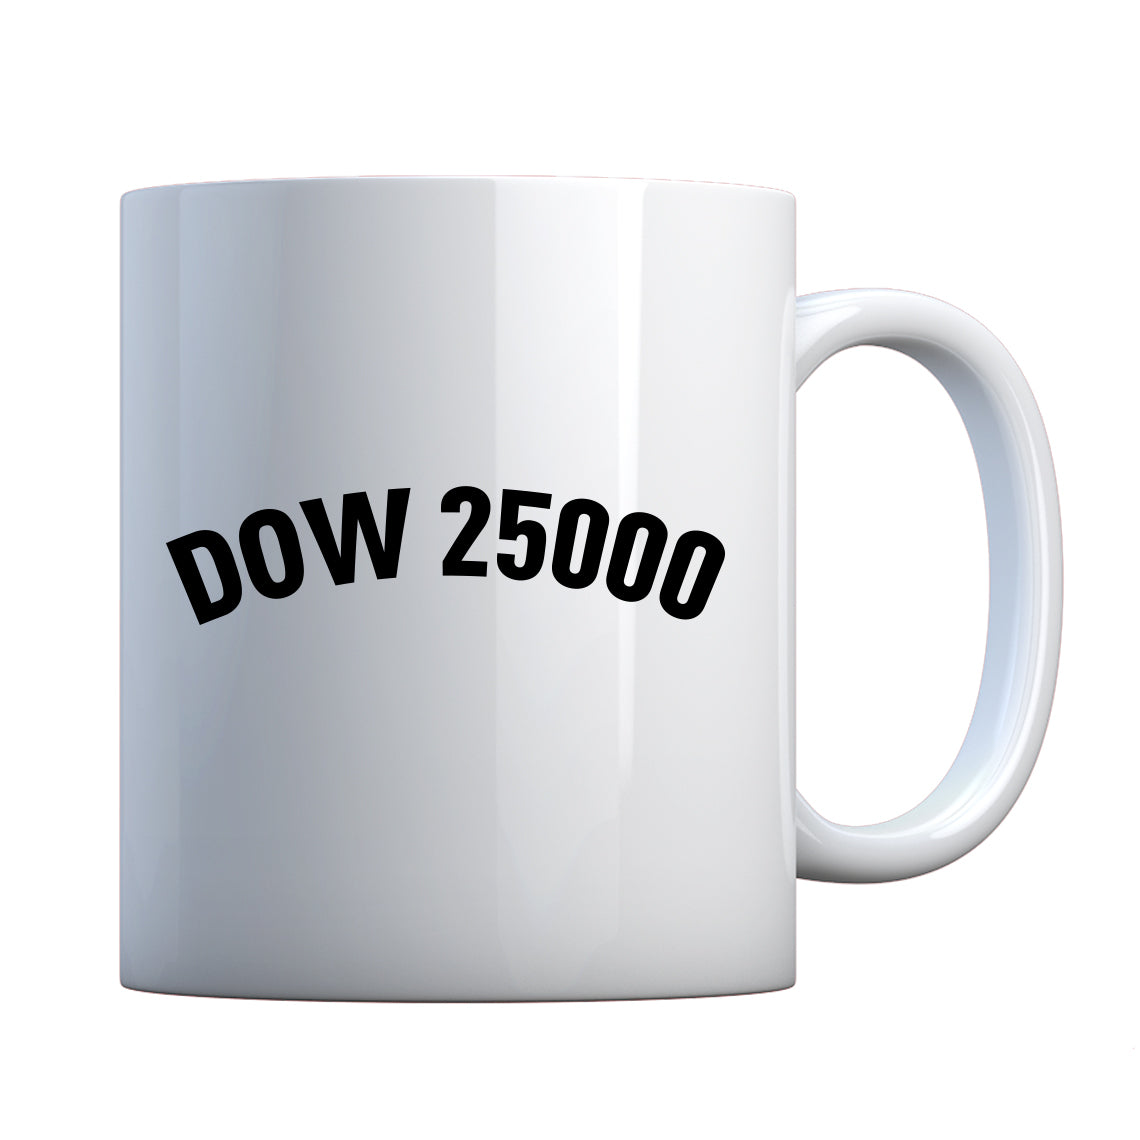 Dow 25000 Ceramic Gift Mug